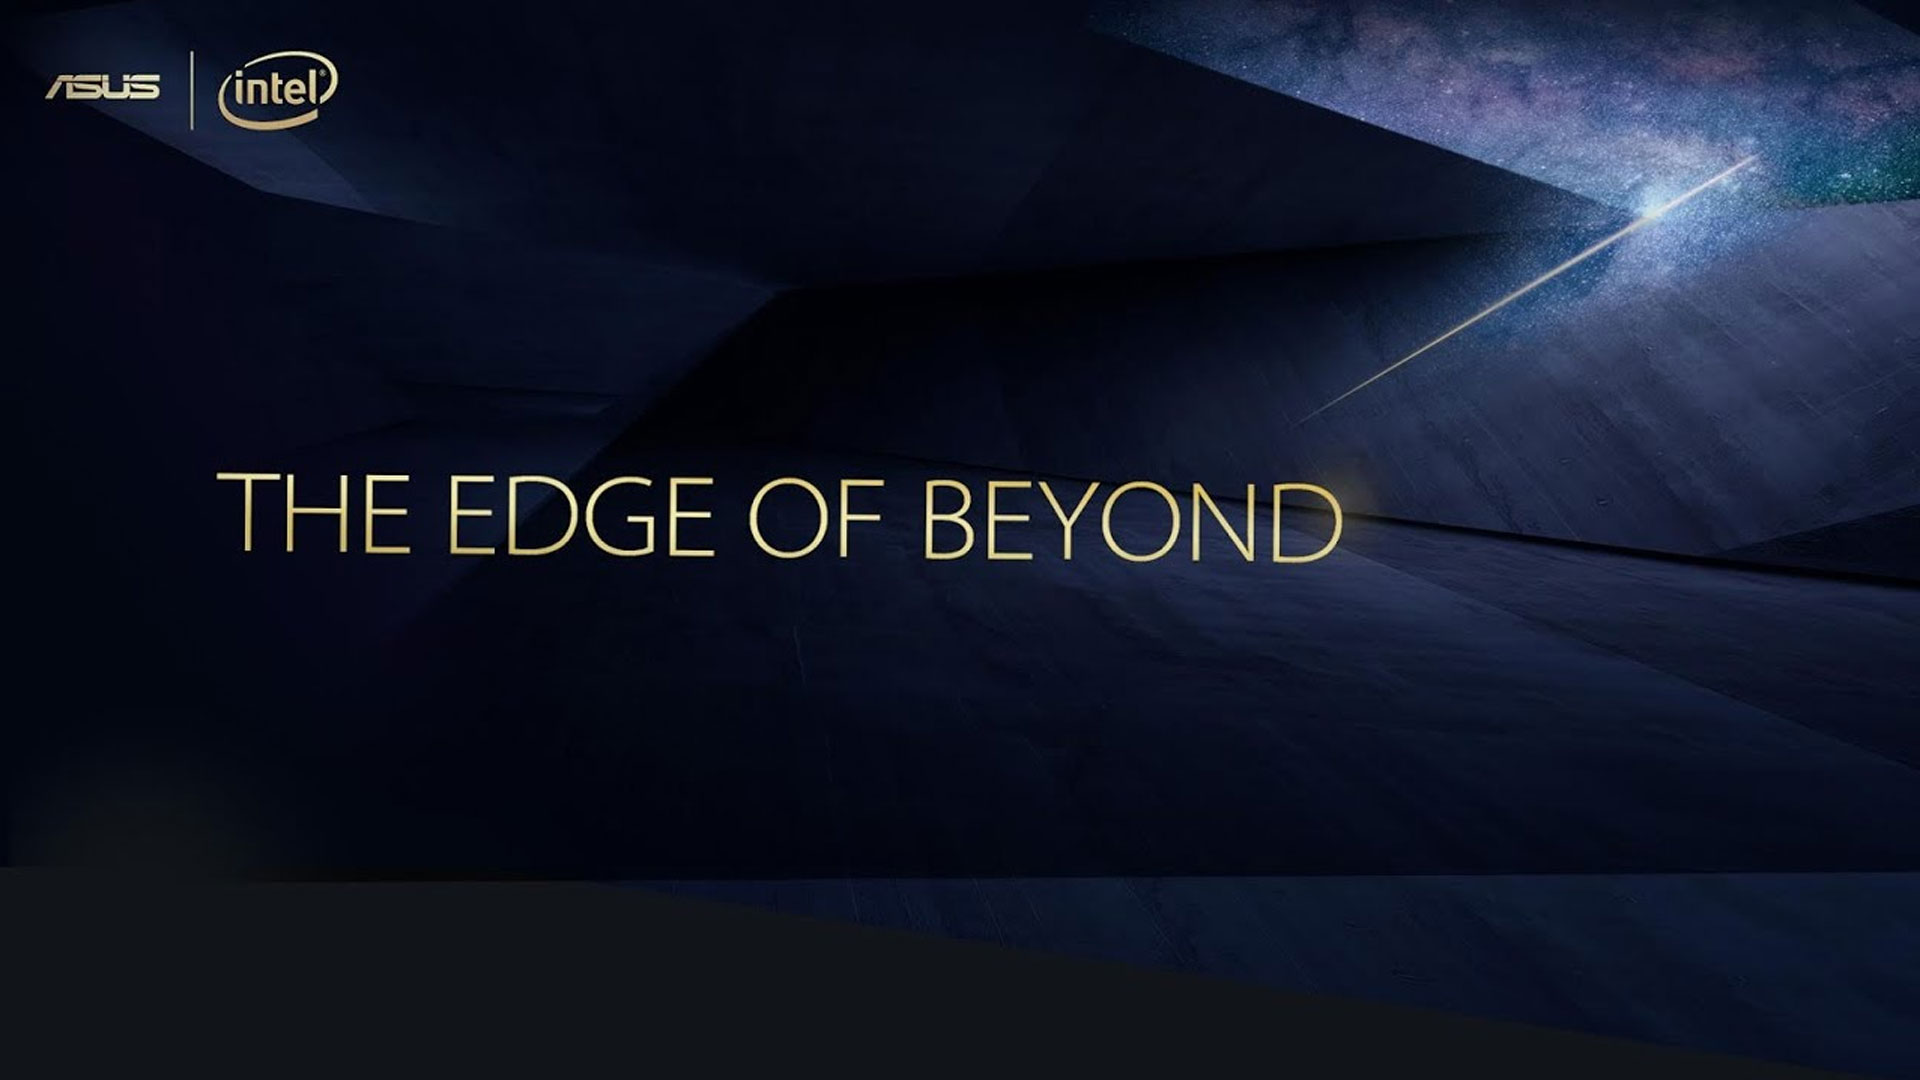 ASUS khai mạc sự kiện The Edge of Beyond tại IFA 2017